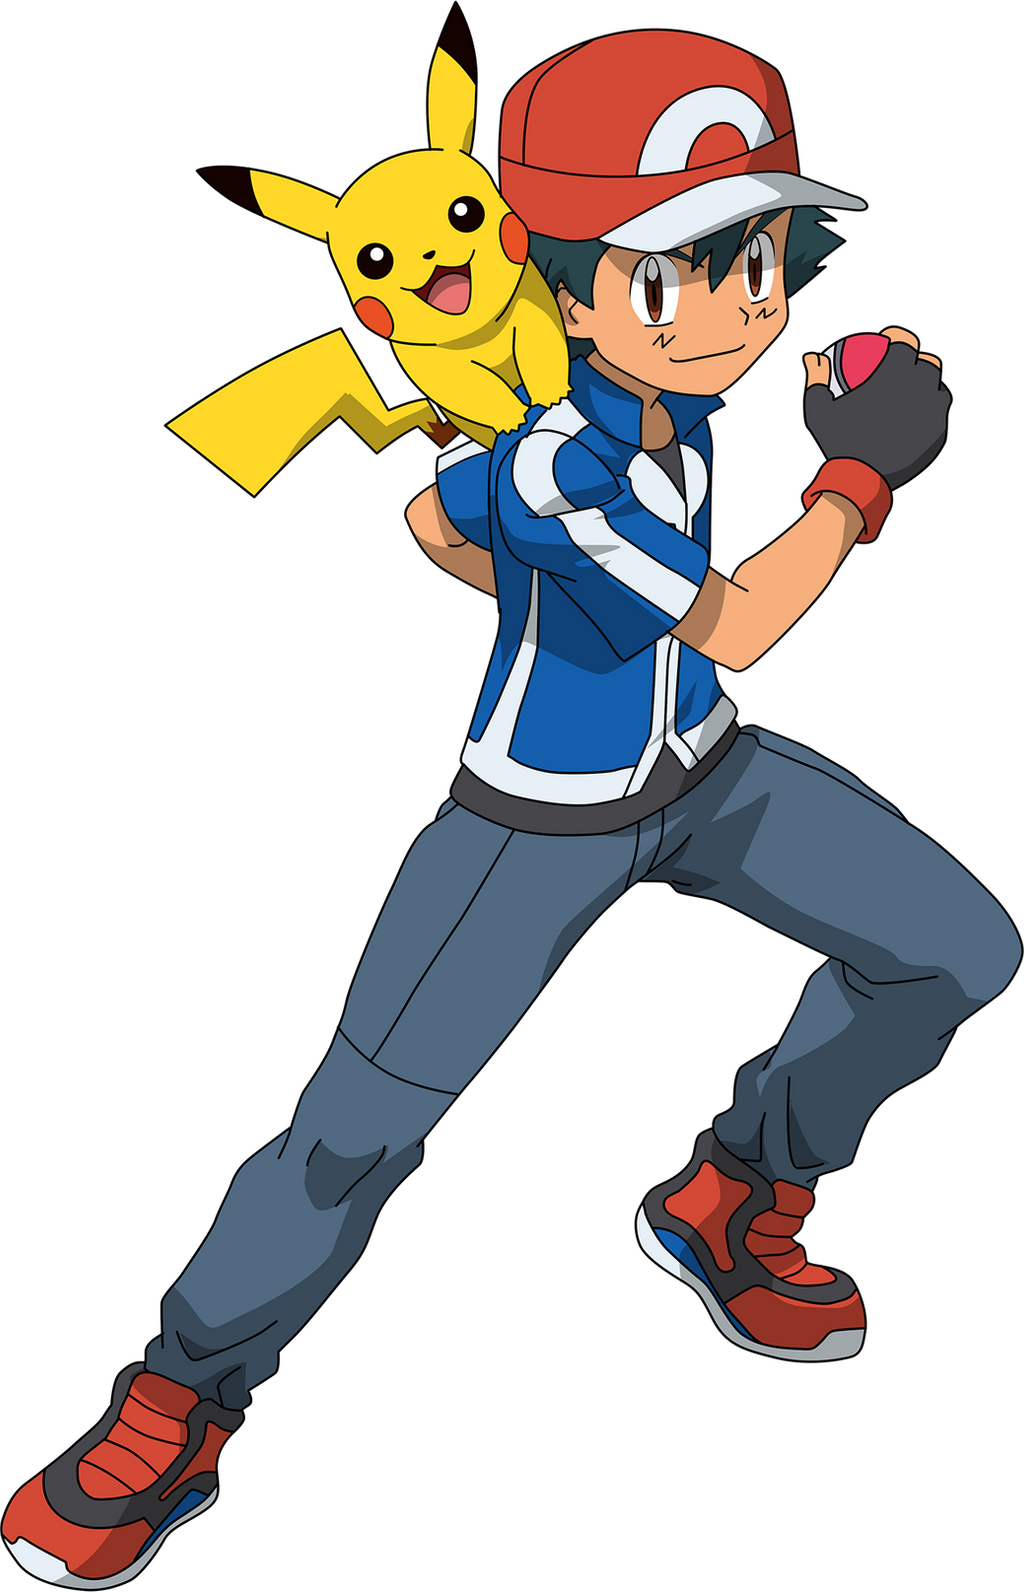 Pokémon reveals Captain Pikachu, star of the new post-Ash Ketchum TV show